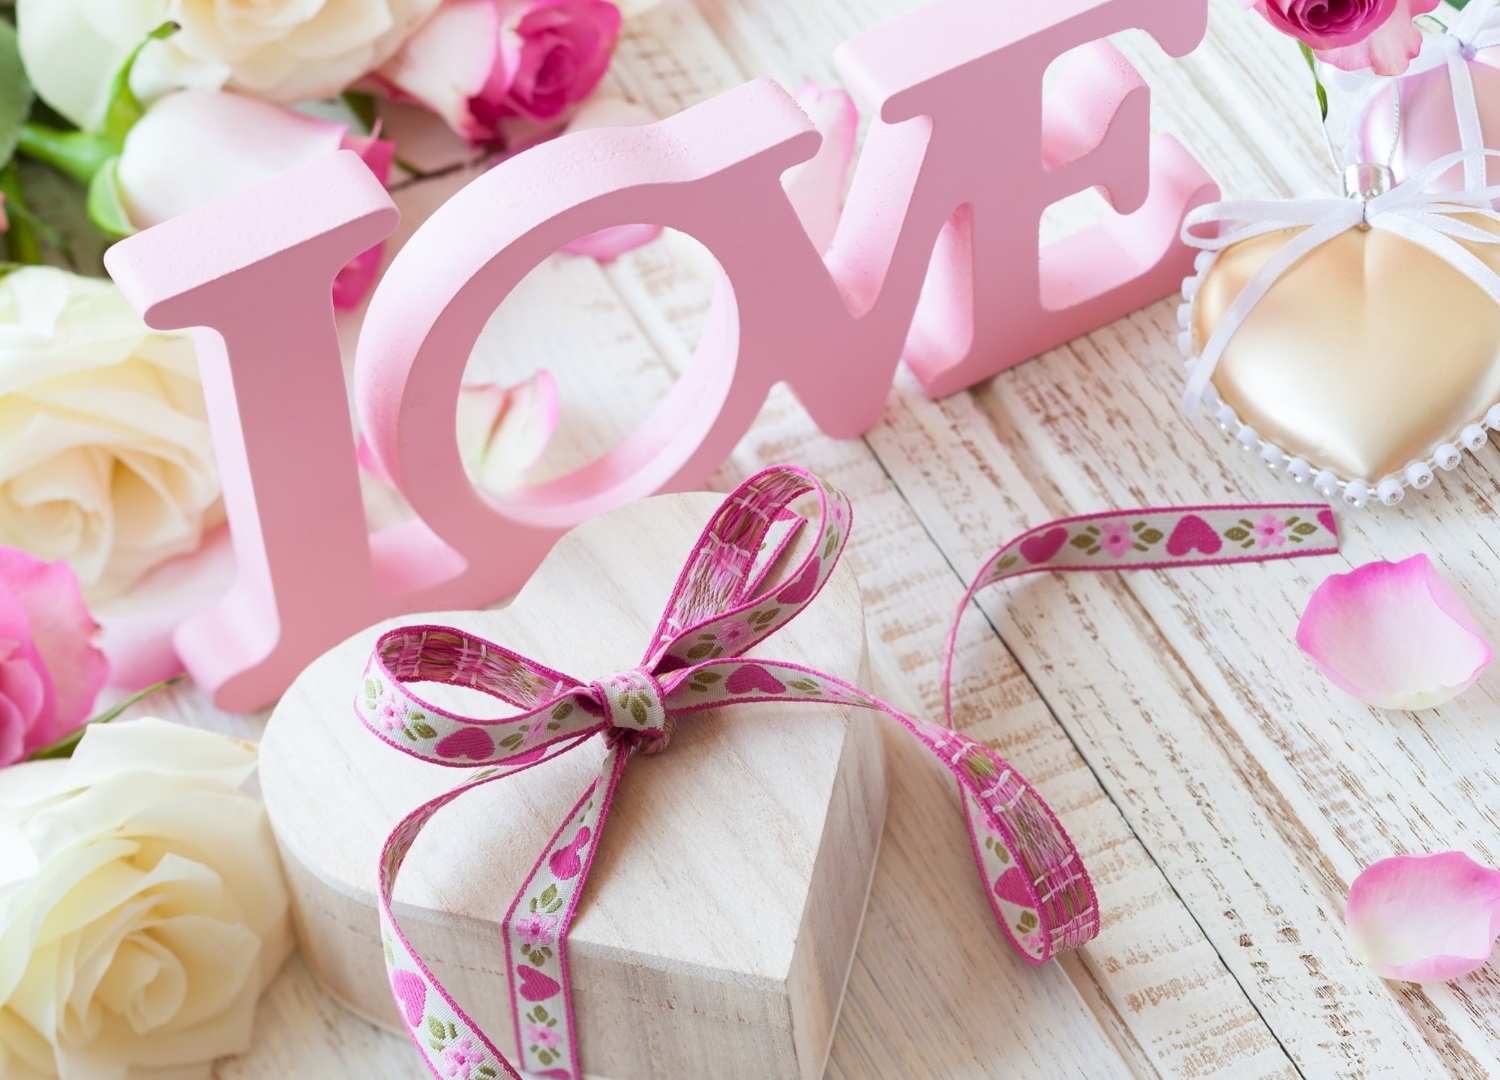 Laser Cut Valentine’s Day Concept Love Decor Letters Free Vector